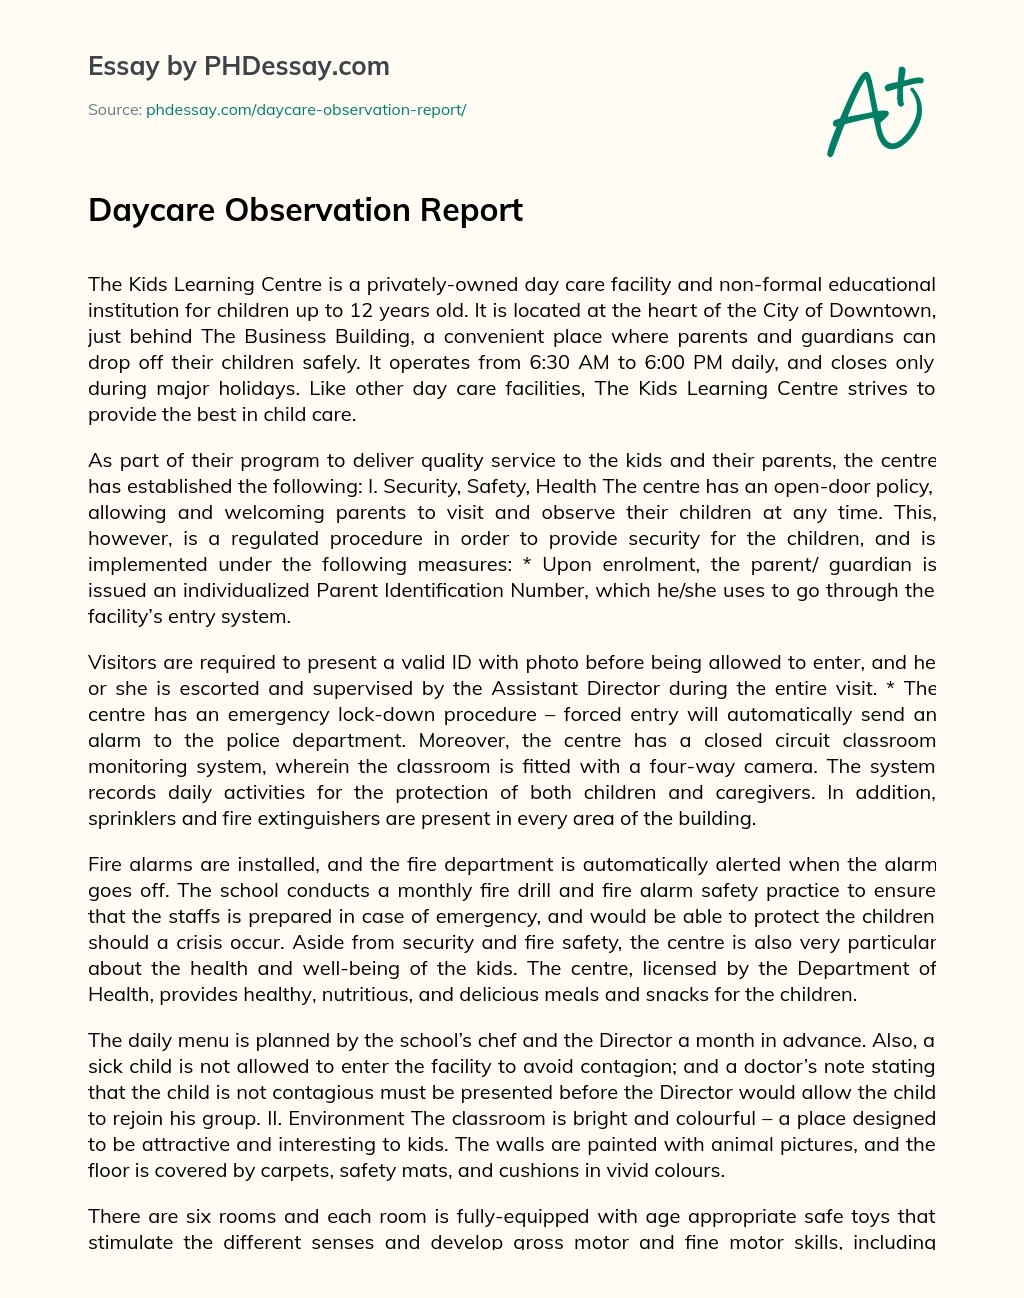 Daycare Observation Report essay